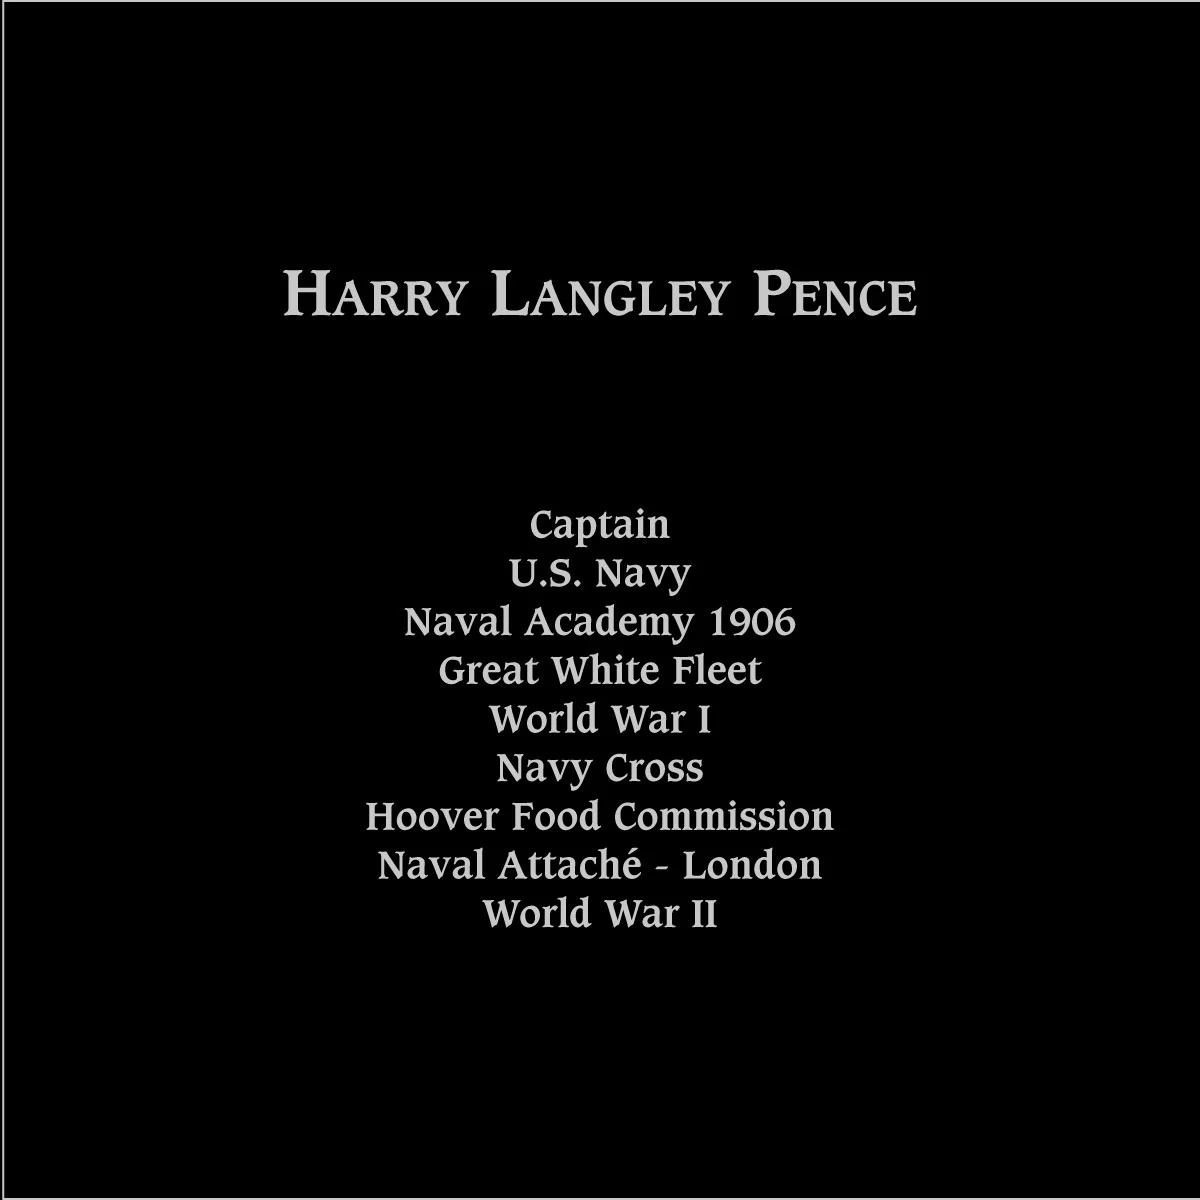 Harry Langley Pence